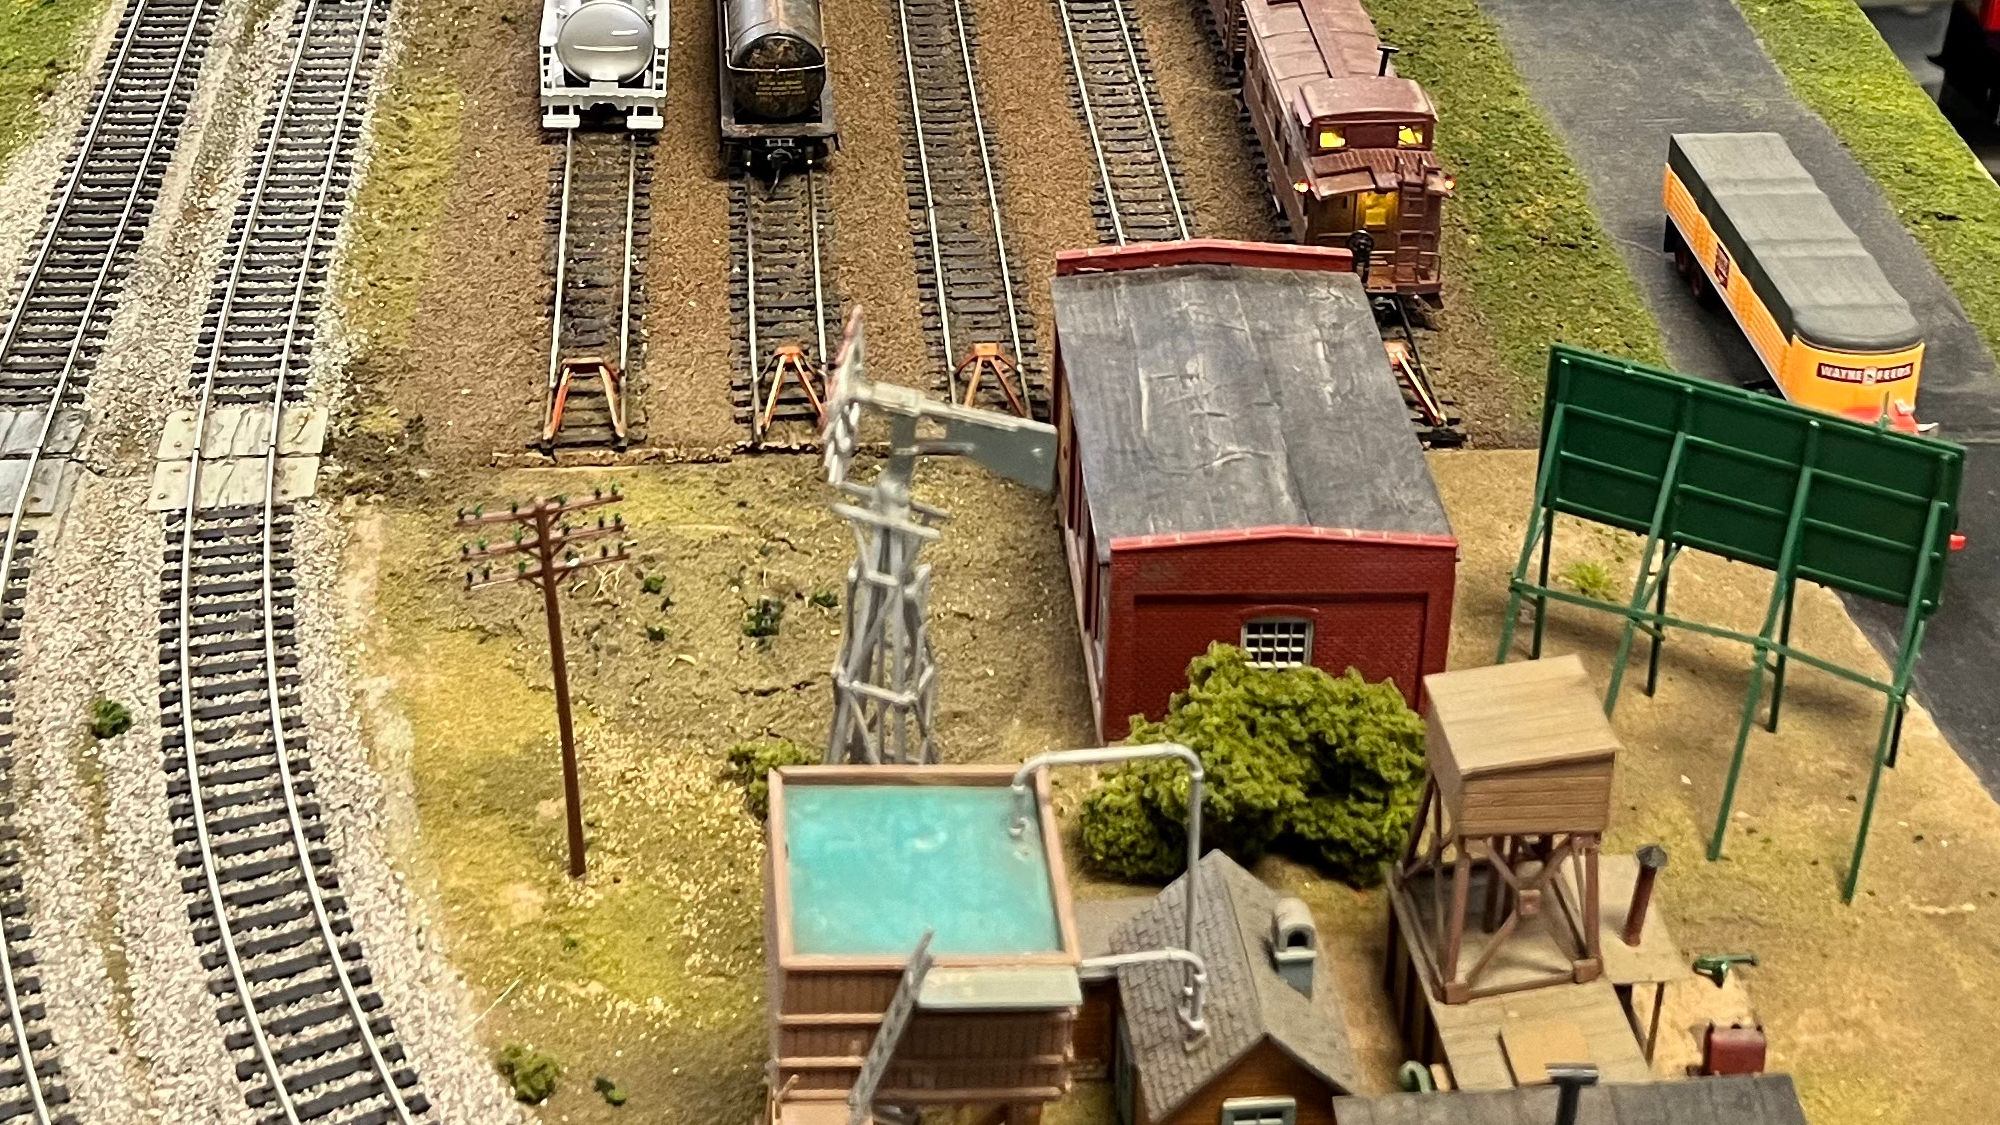 Model Railroad Train Yard